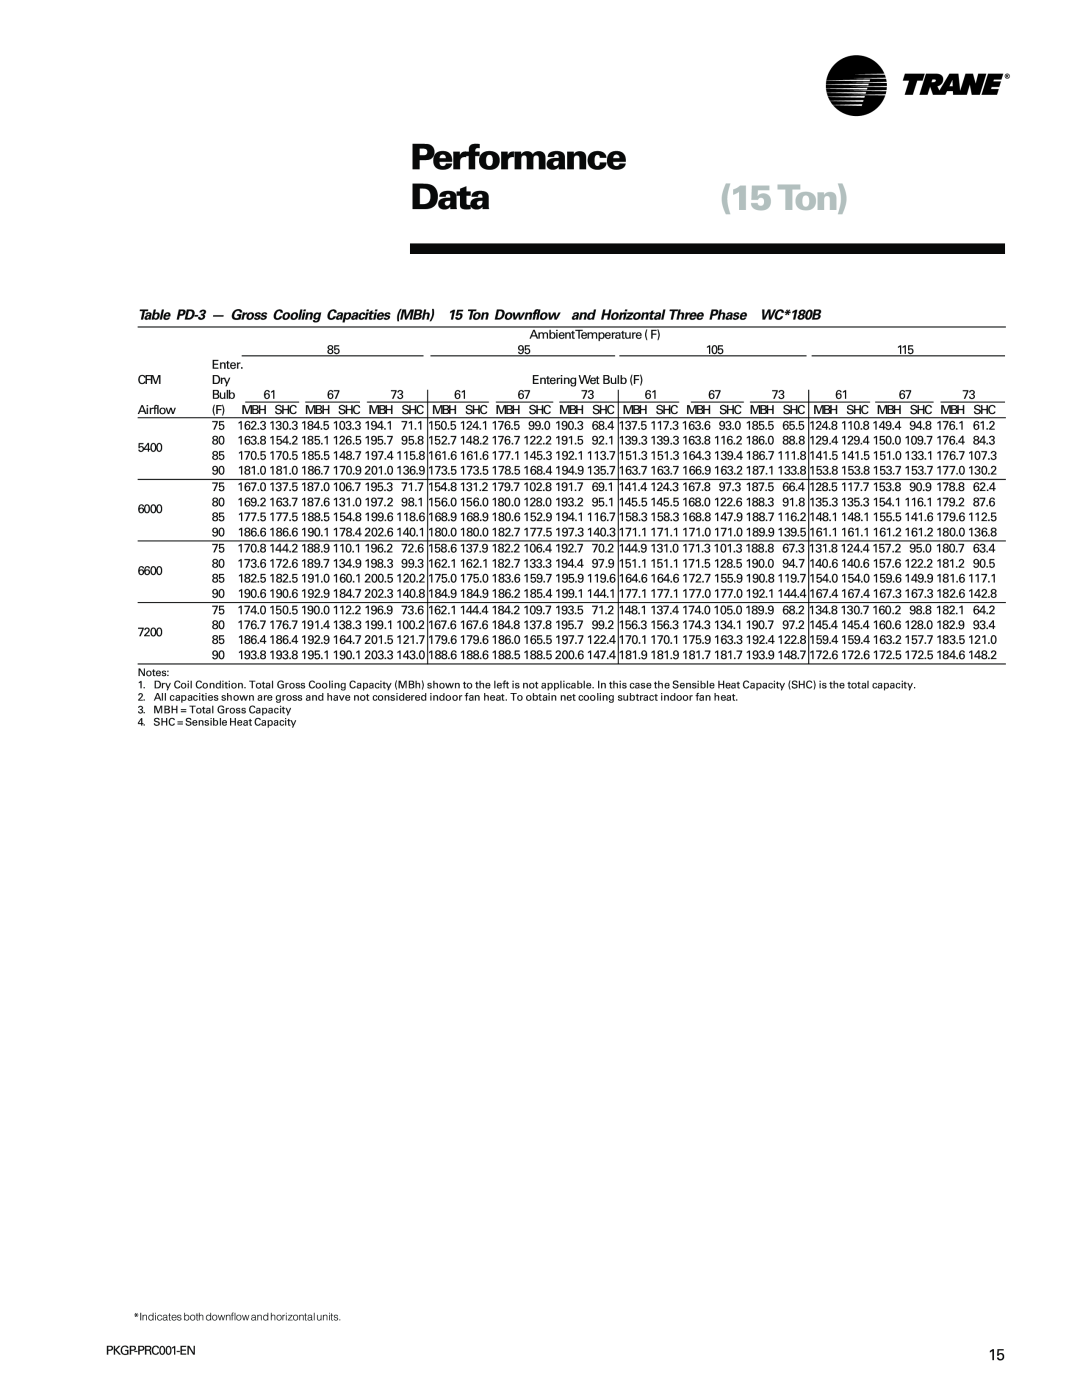 Trane PKGP-PRC001-EN manual Data15Ton, Performance, WC*180B, Table PD-3- Gross Cooling Capacities MBh 